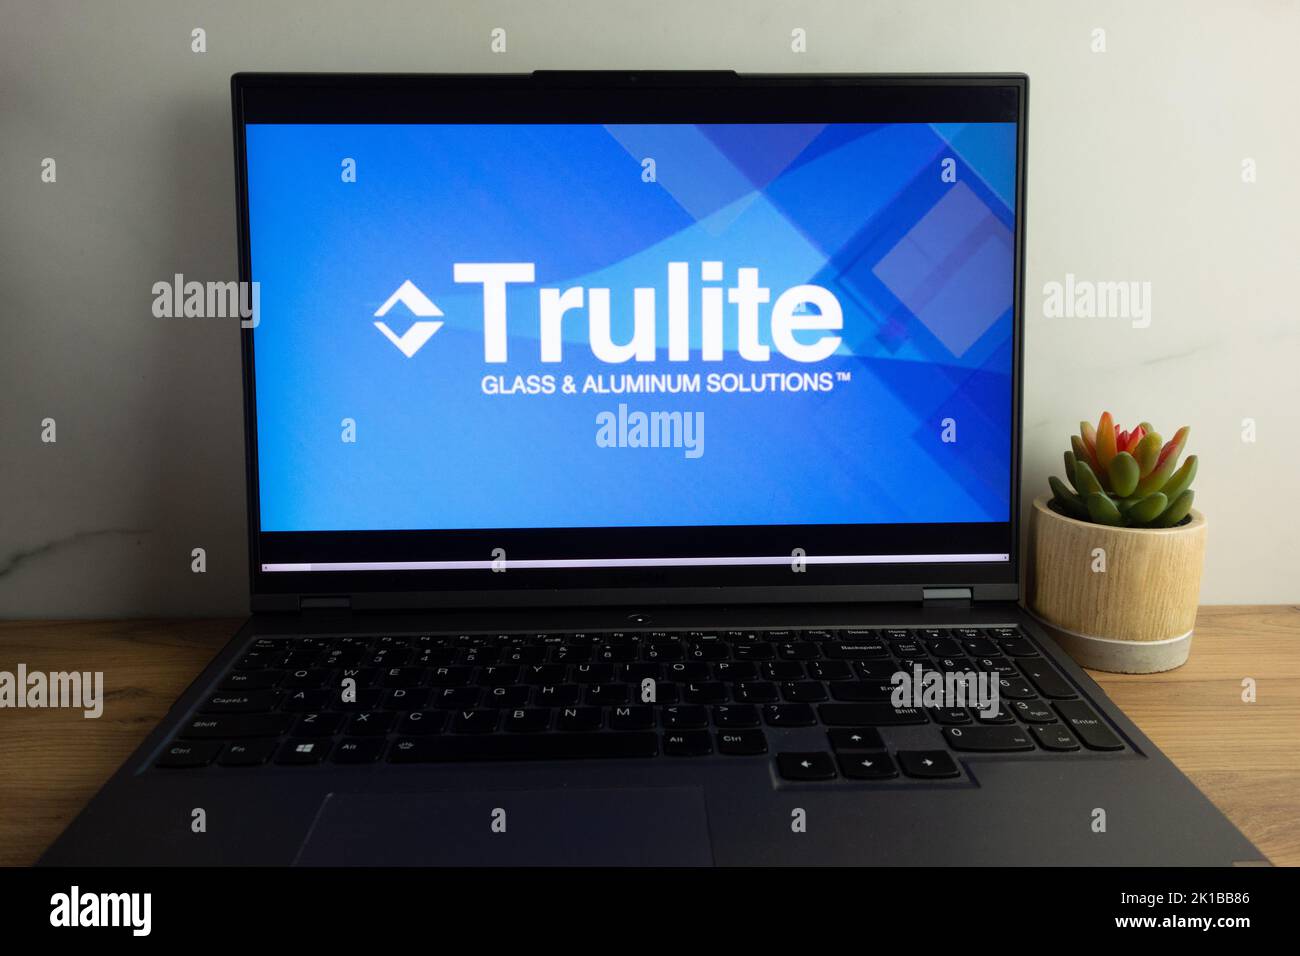 KONSKIE, POLAND - September 12, 2022: Trulite company logo displayed on laptop computer screen Stock Photo